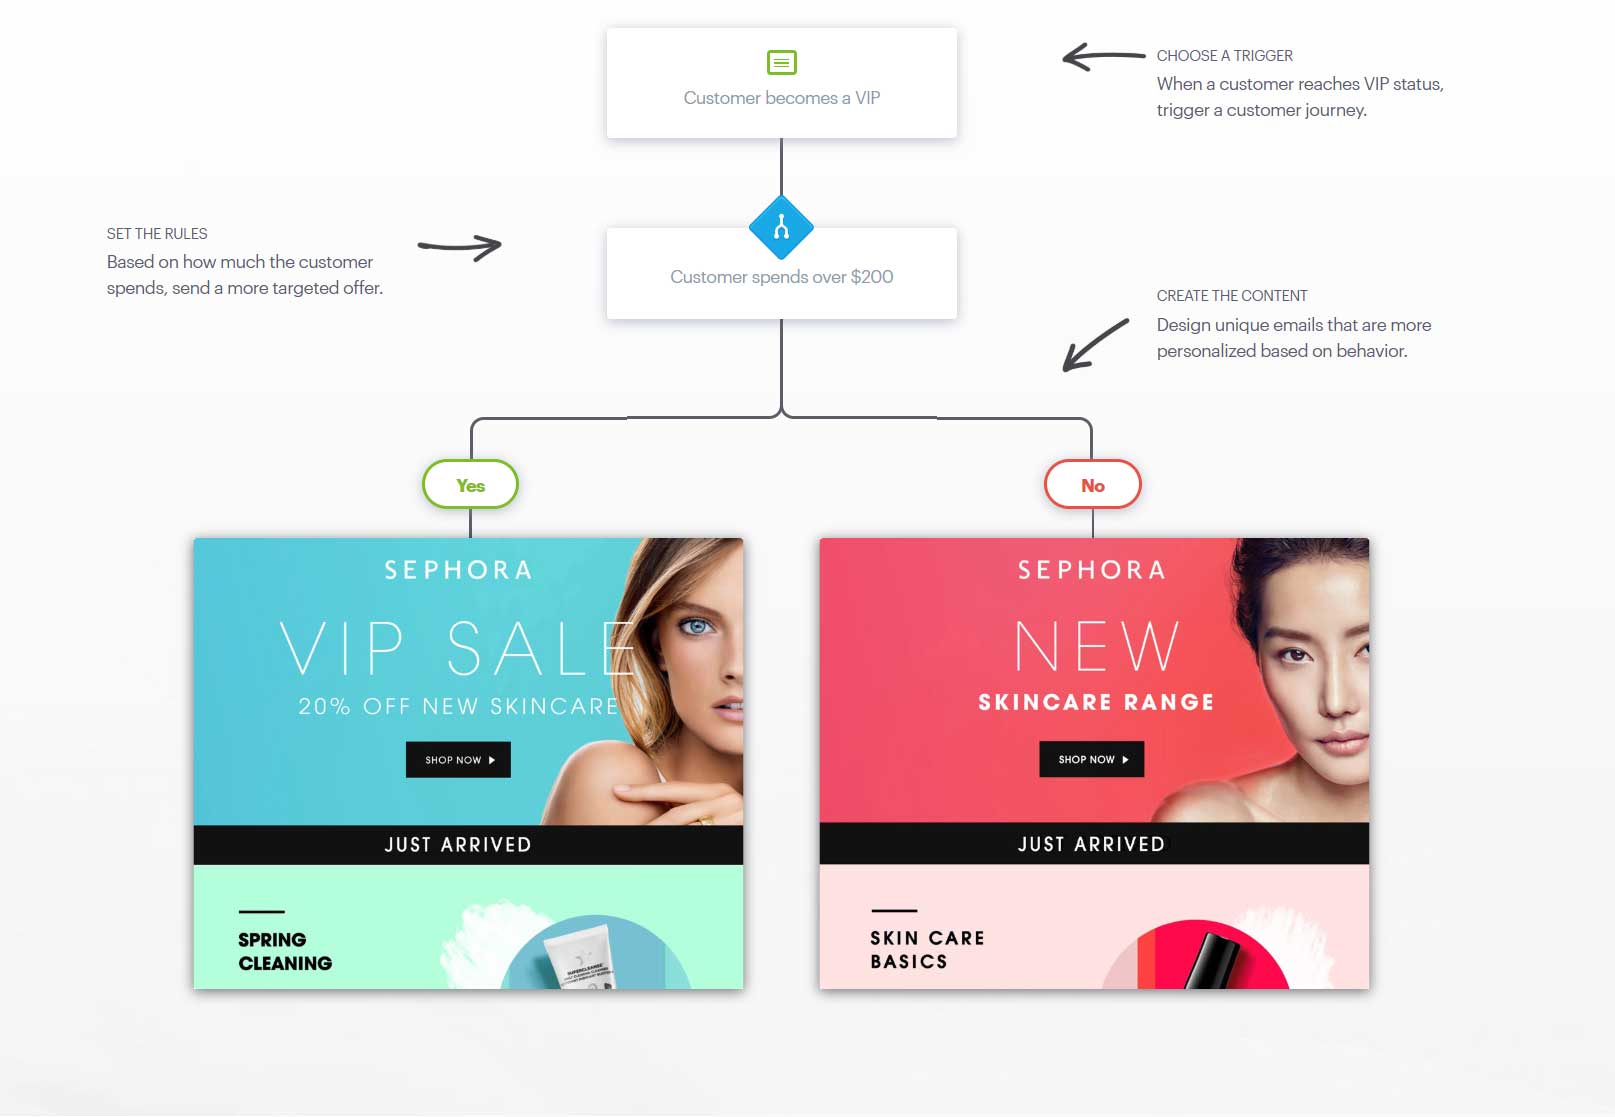 Sephora หา Trigger ของลูกค้า เพื่อคัดลูกค้า VIP และส่งข้อความ promotion สำหรับลูกค้า VIP ด้วย Targeted email